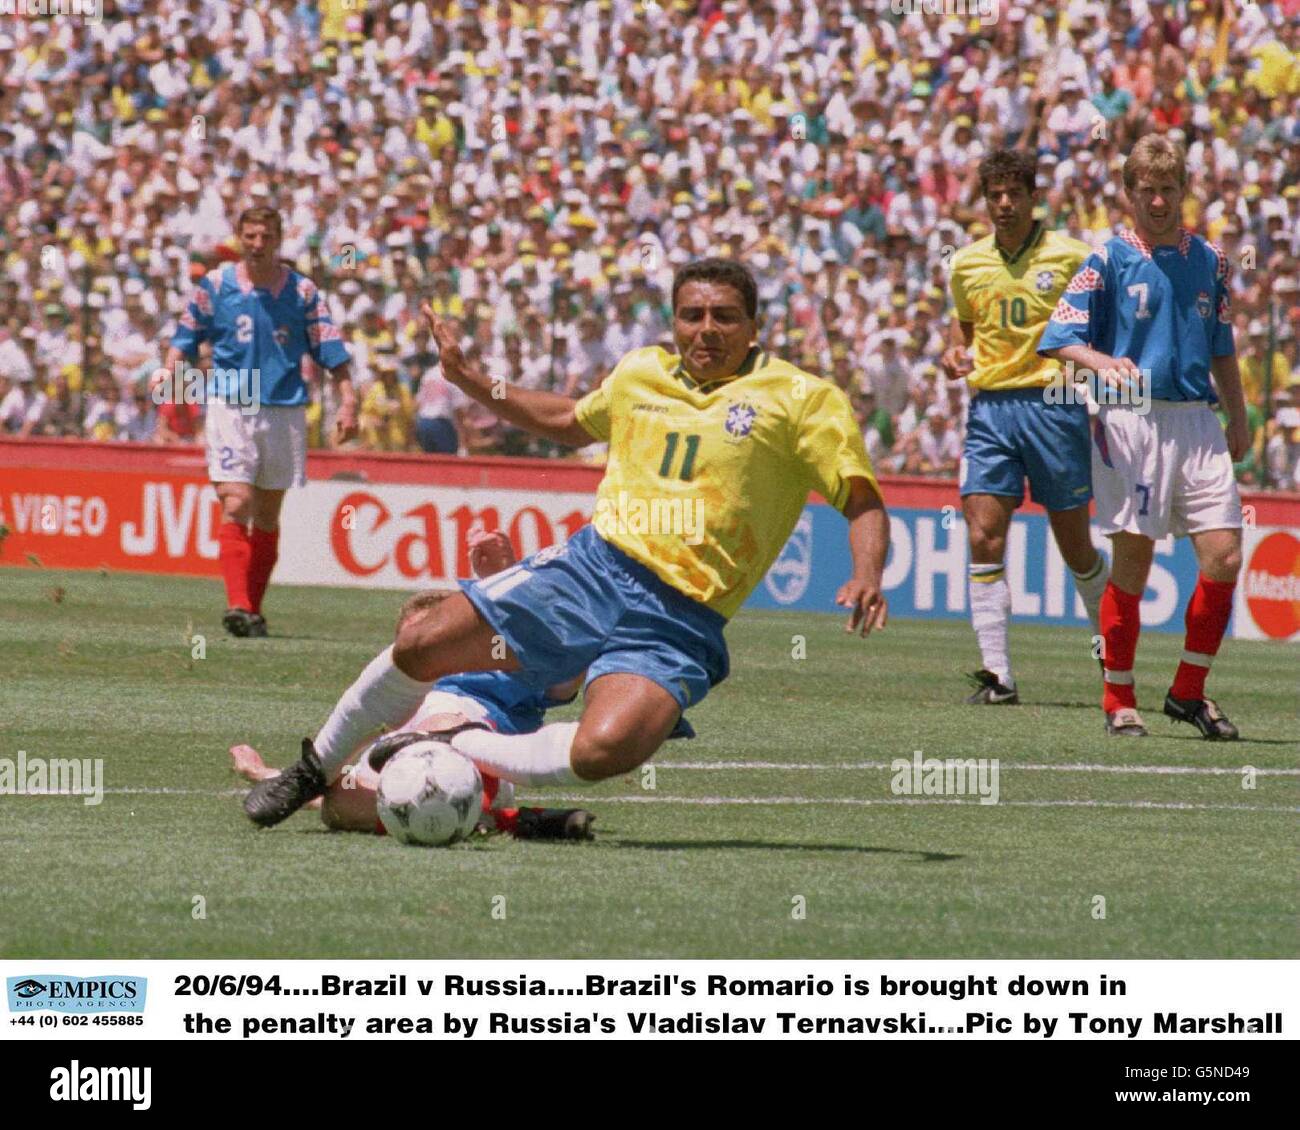 Fußball - WM 94 - Brasilien V Russland Stockfotografie - Alamy